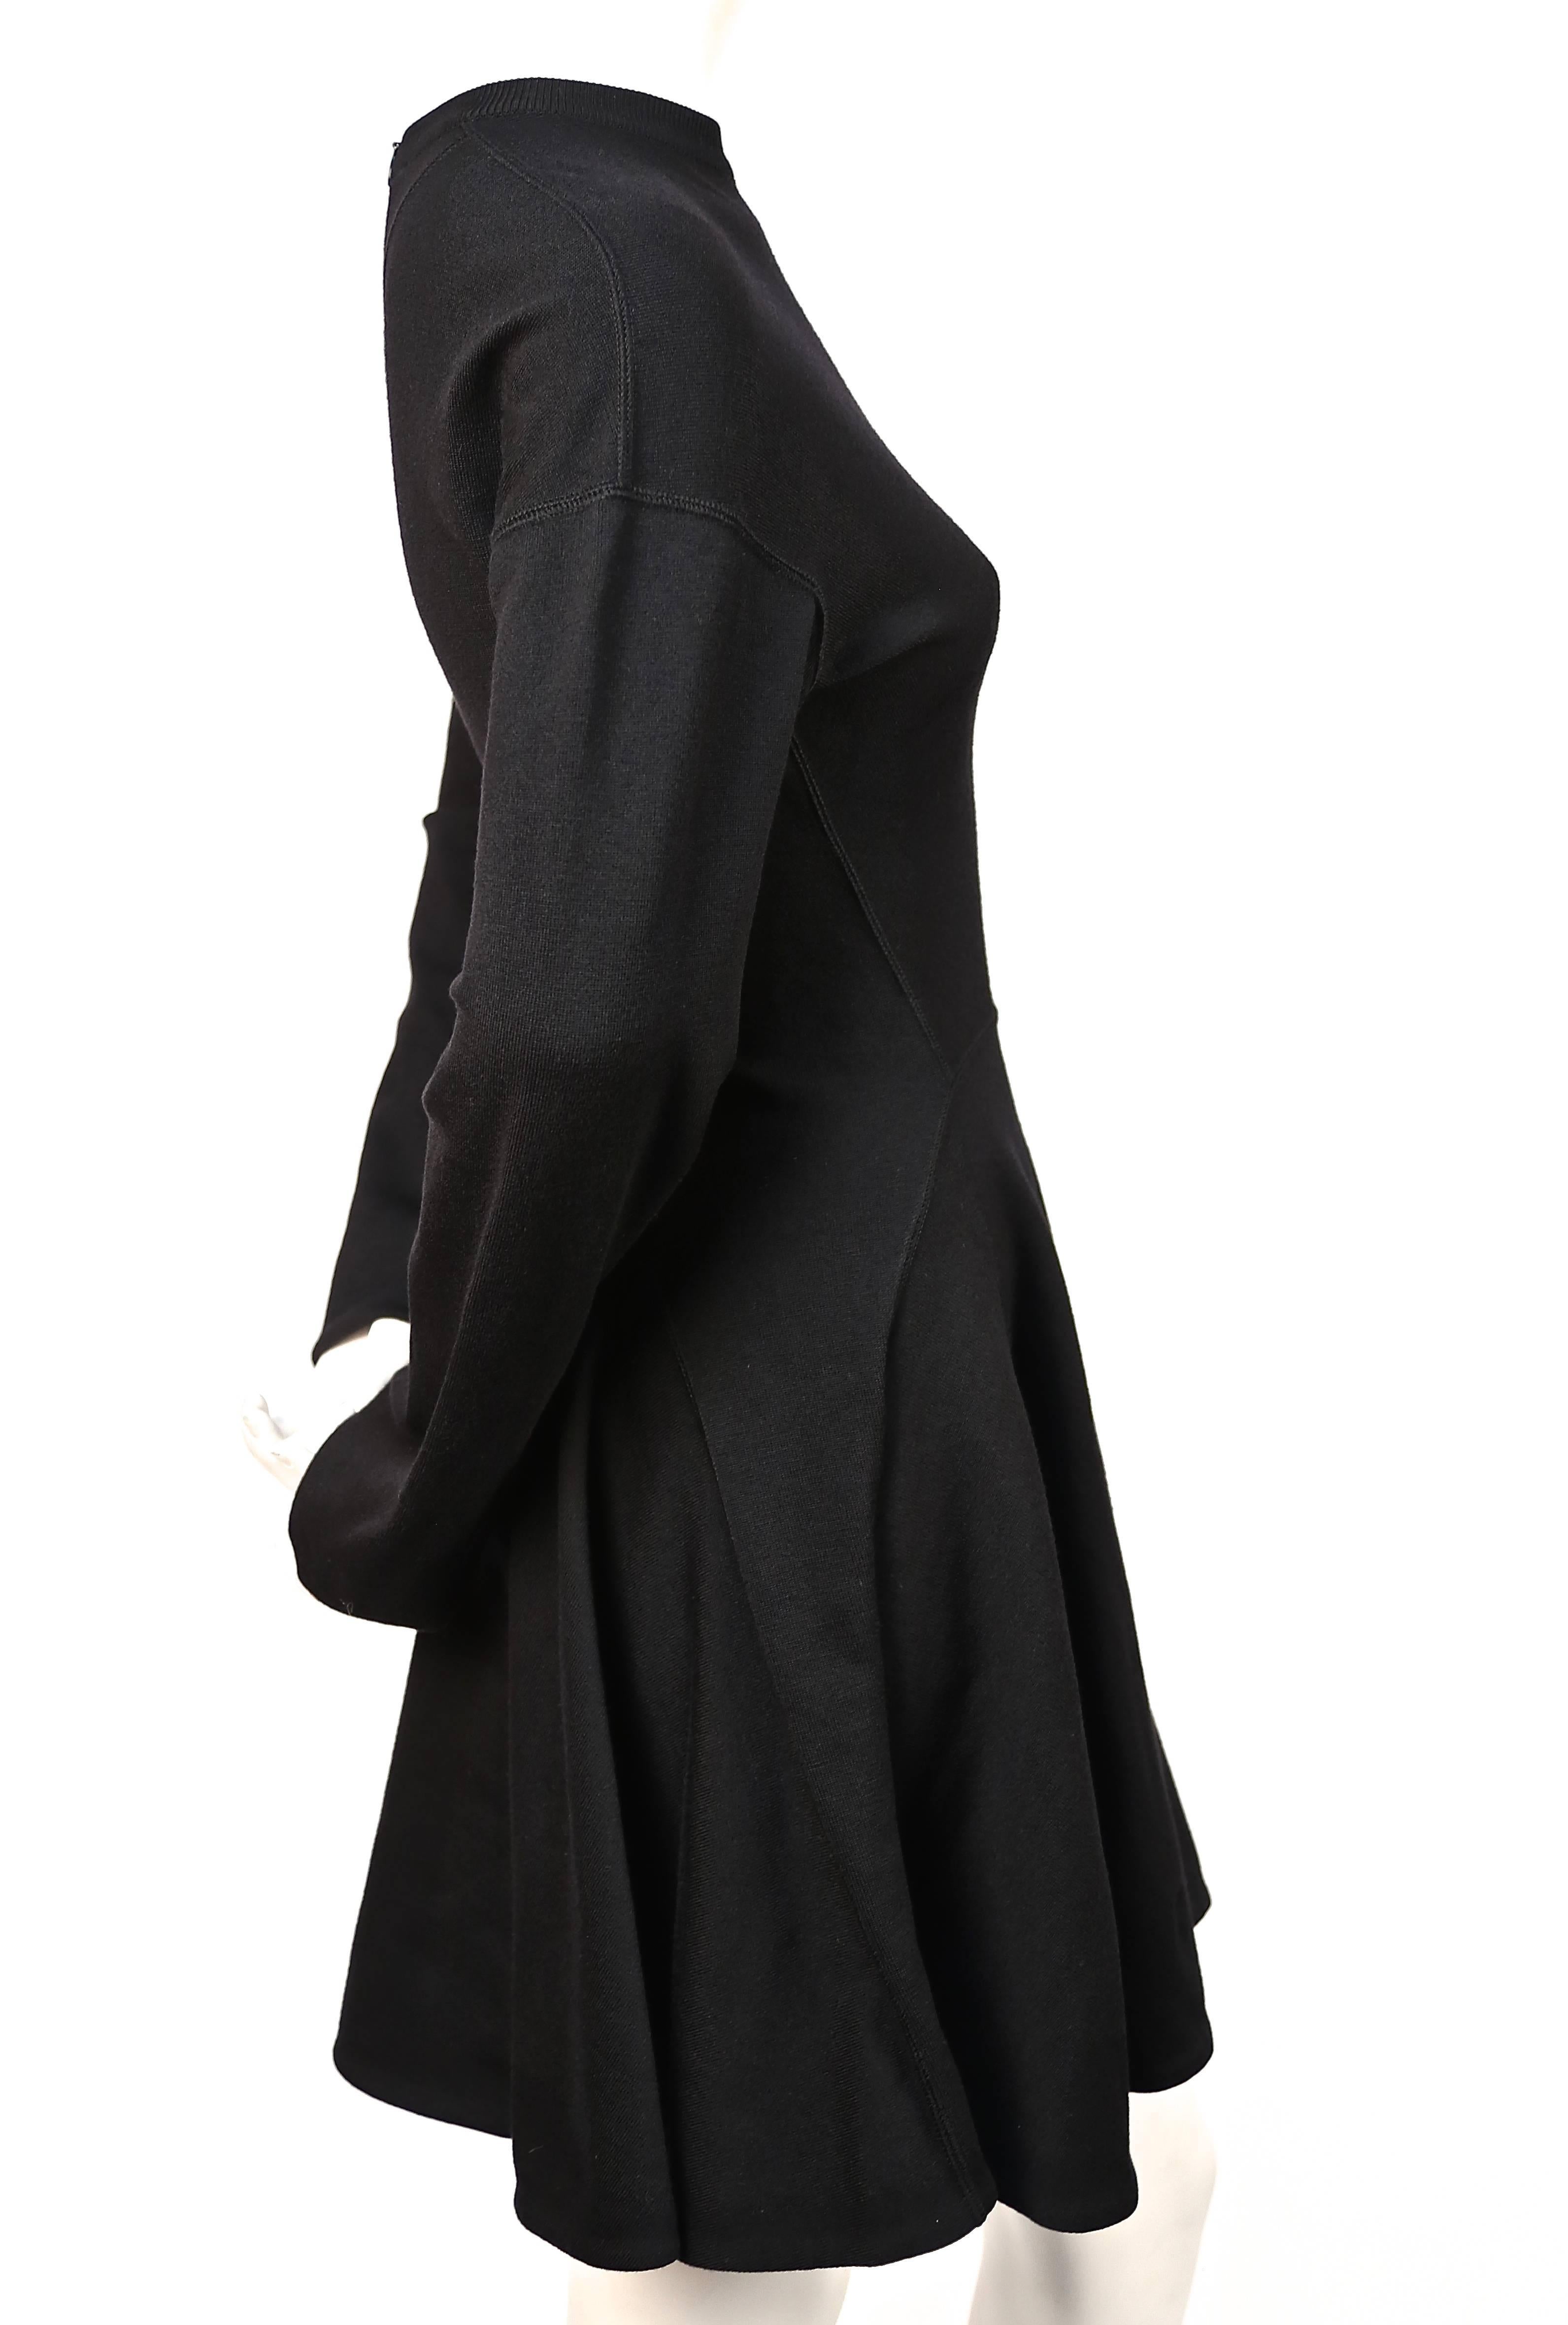 Black AZZEDINE ALAIA jet black seamed mini dress with full skirt